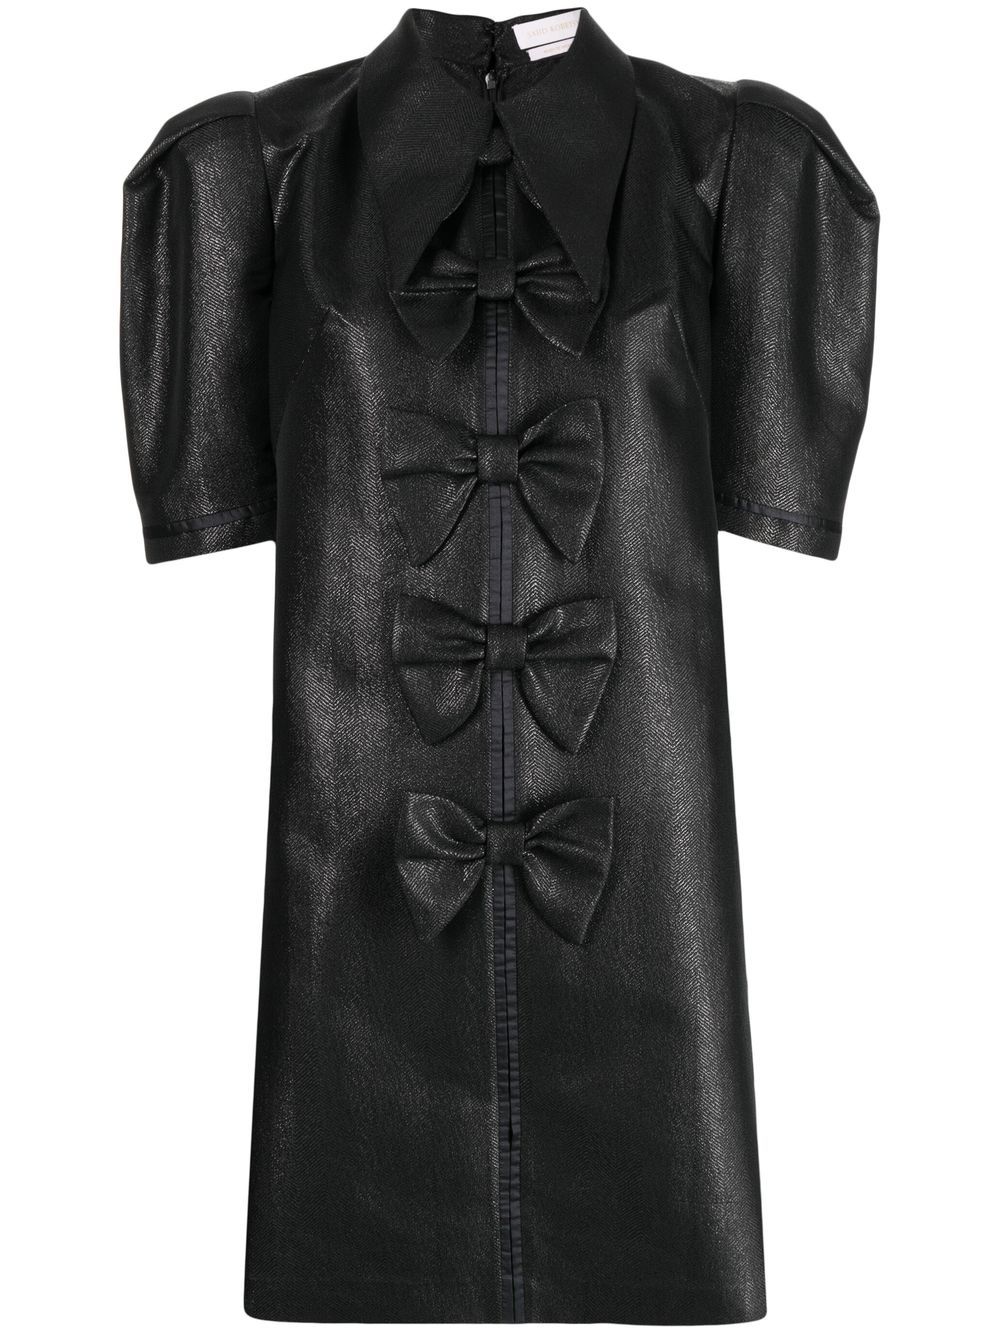 Saiid Kobeisy brocade faux-leather dress - Black von Saiid Kobeisy